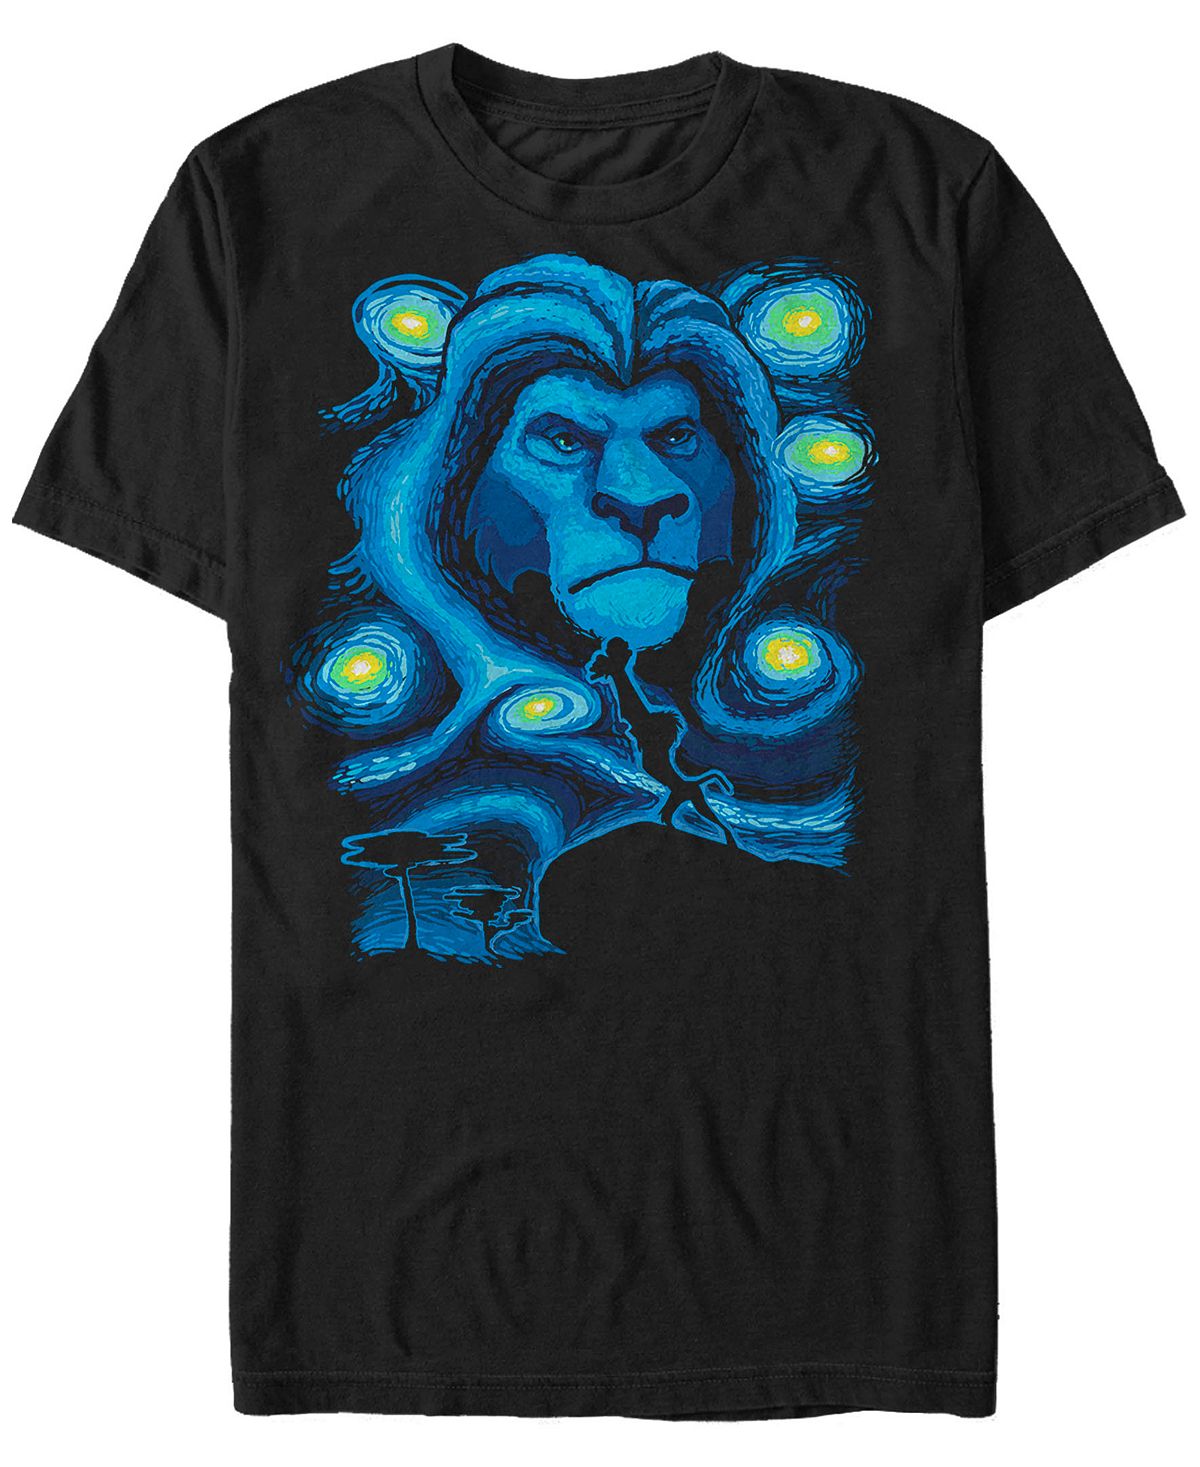 Мужская футболка с коротким рукавом disney the lion king mufasa starry night Fifth Sun, черный цена и фото